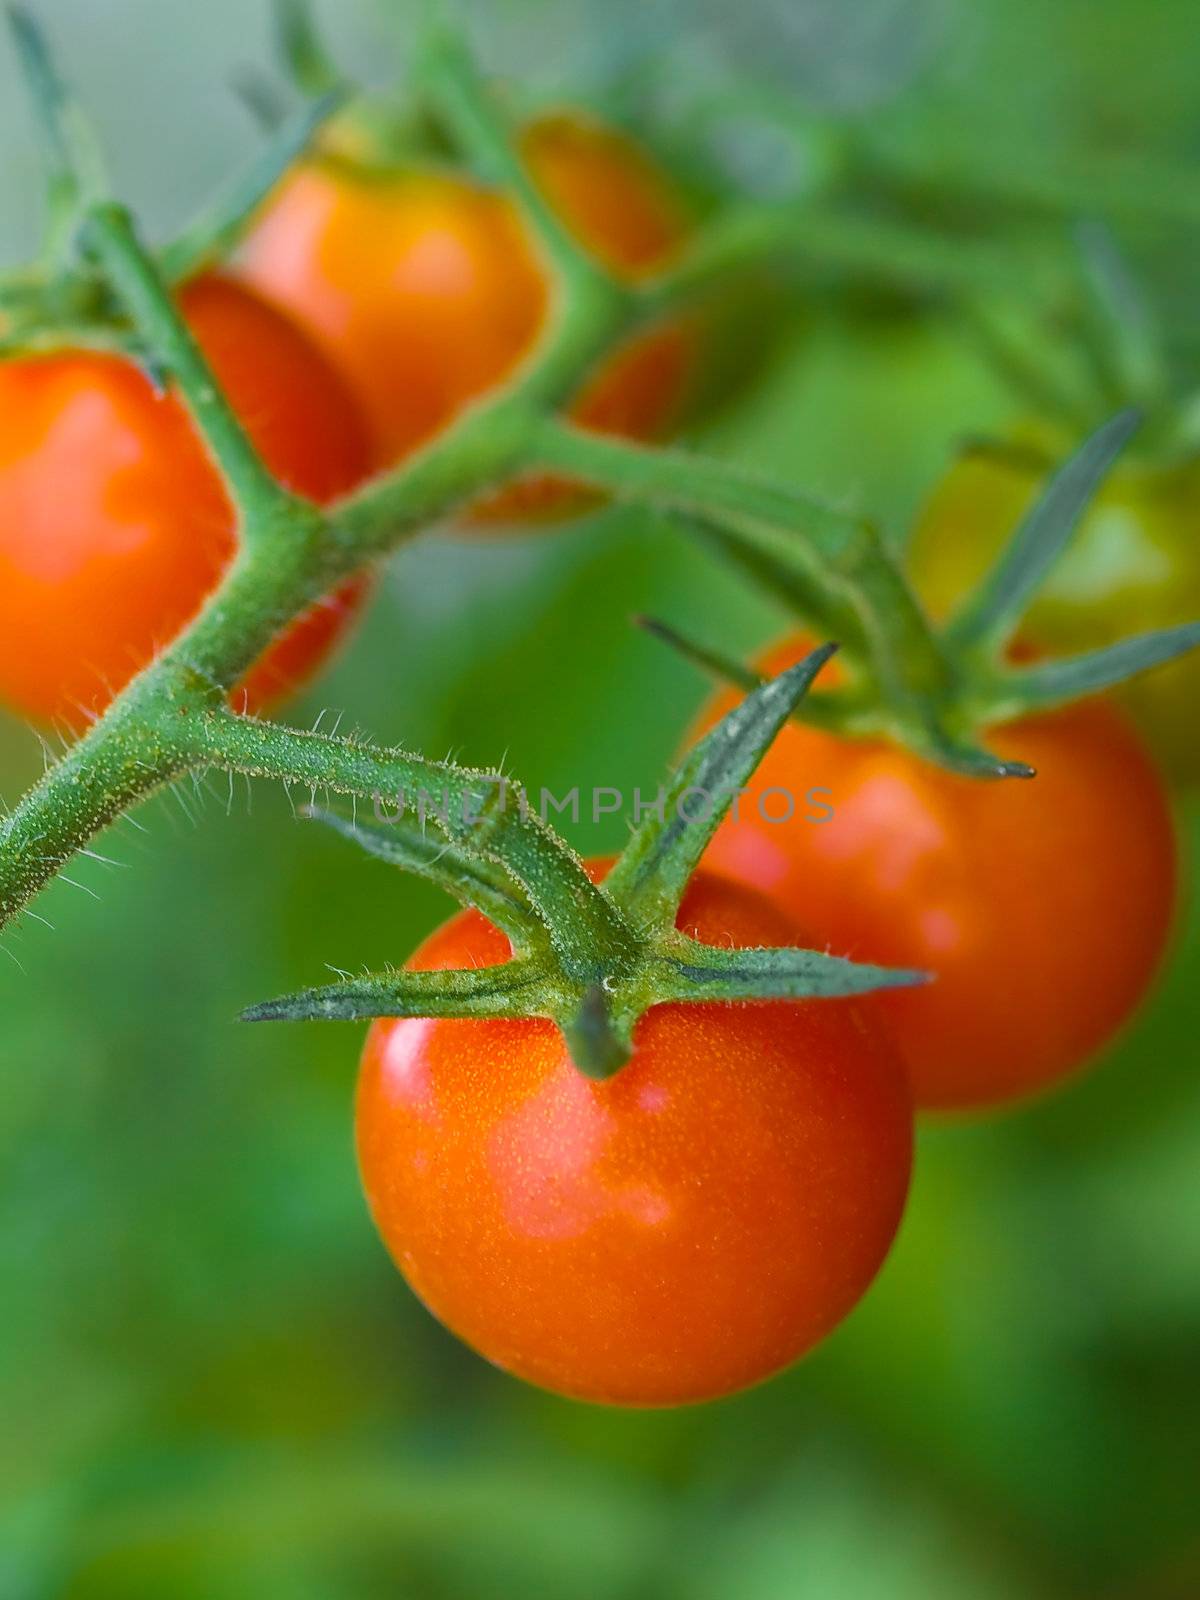 Tomatoes on the Vine by Frankljunior